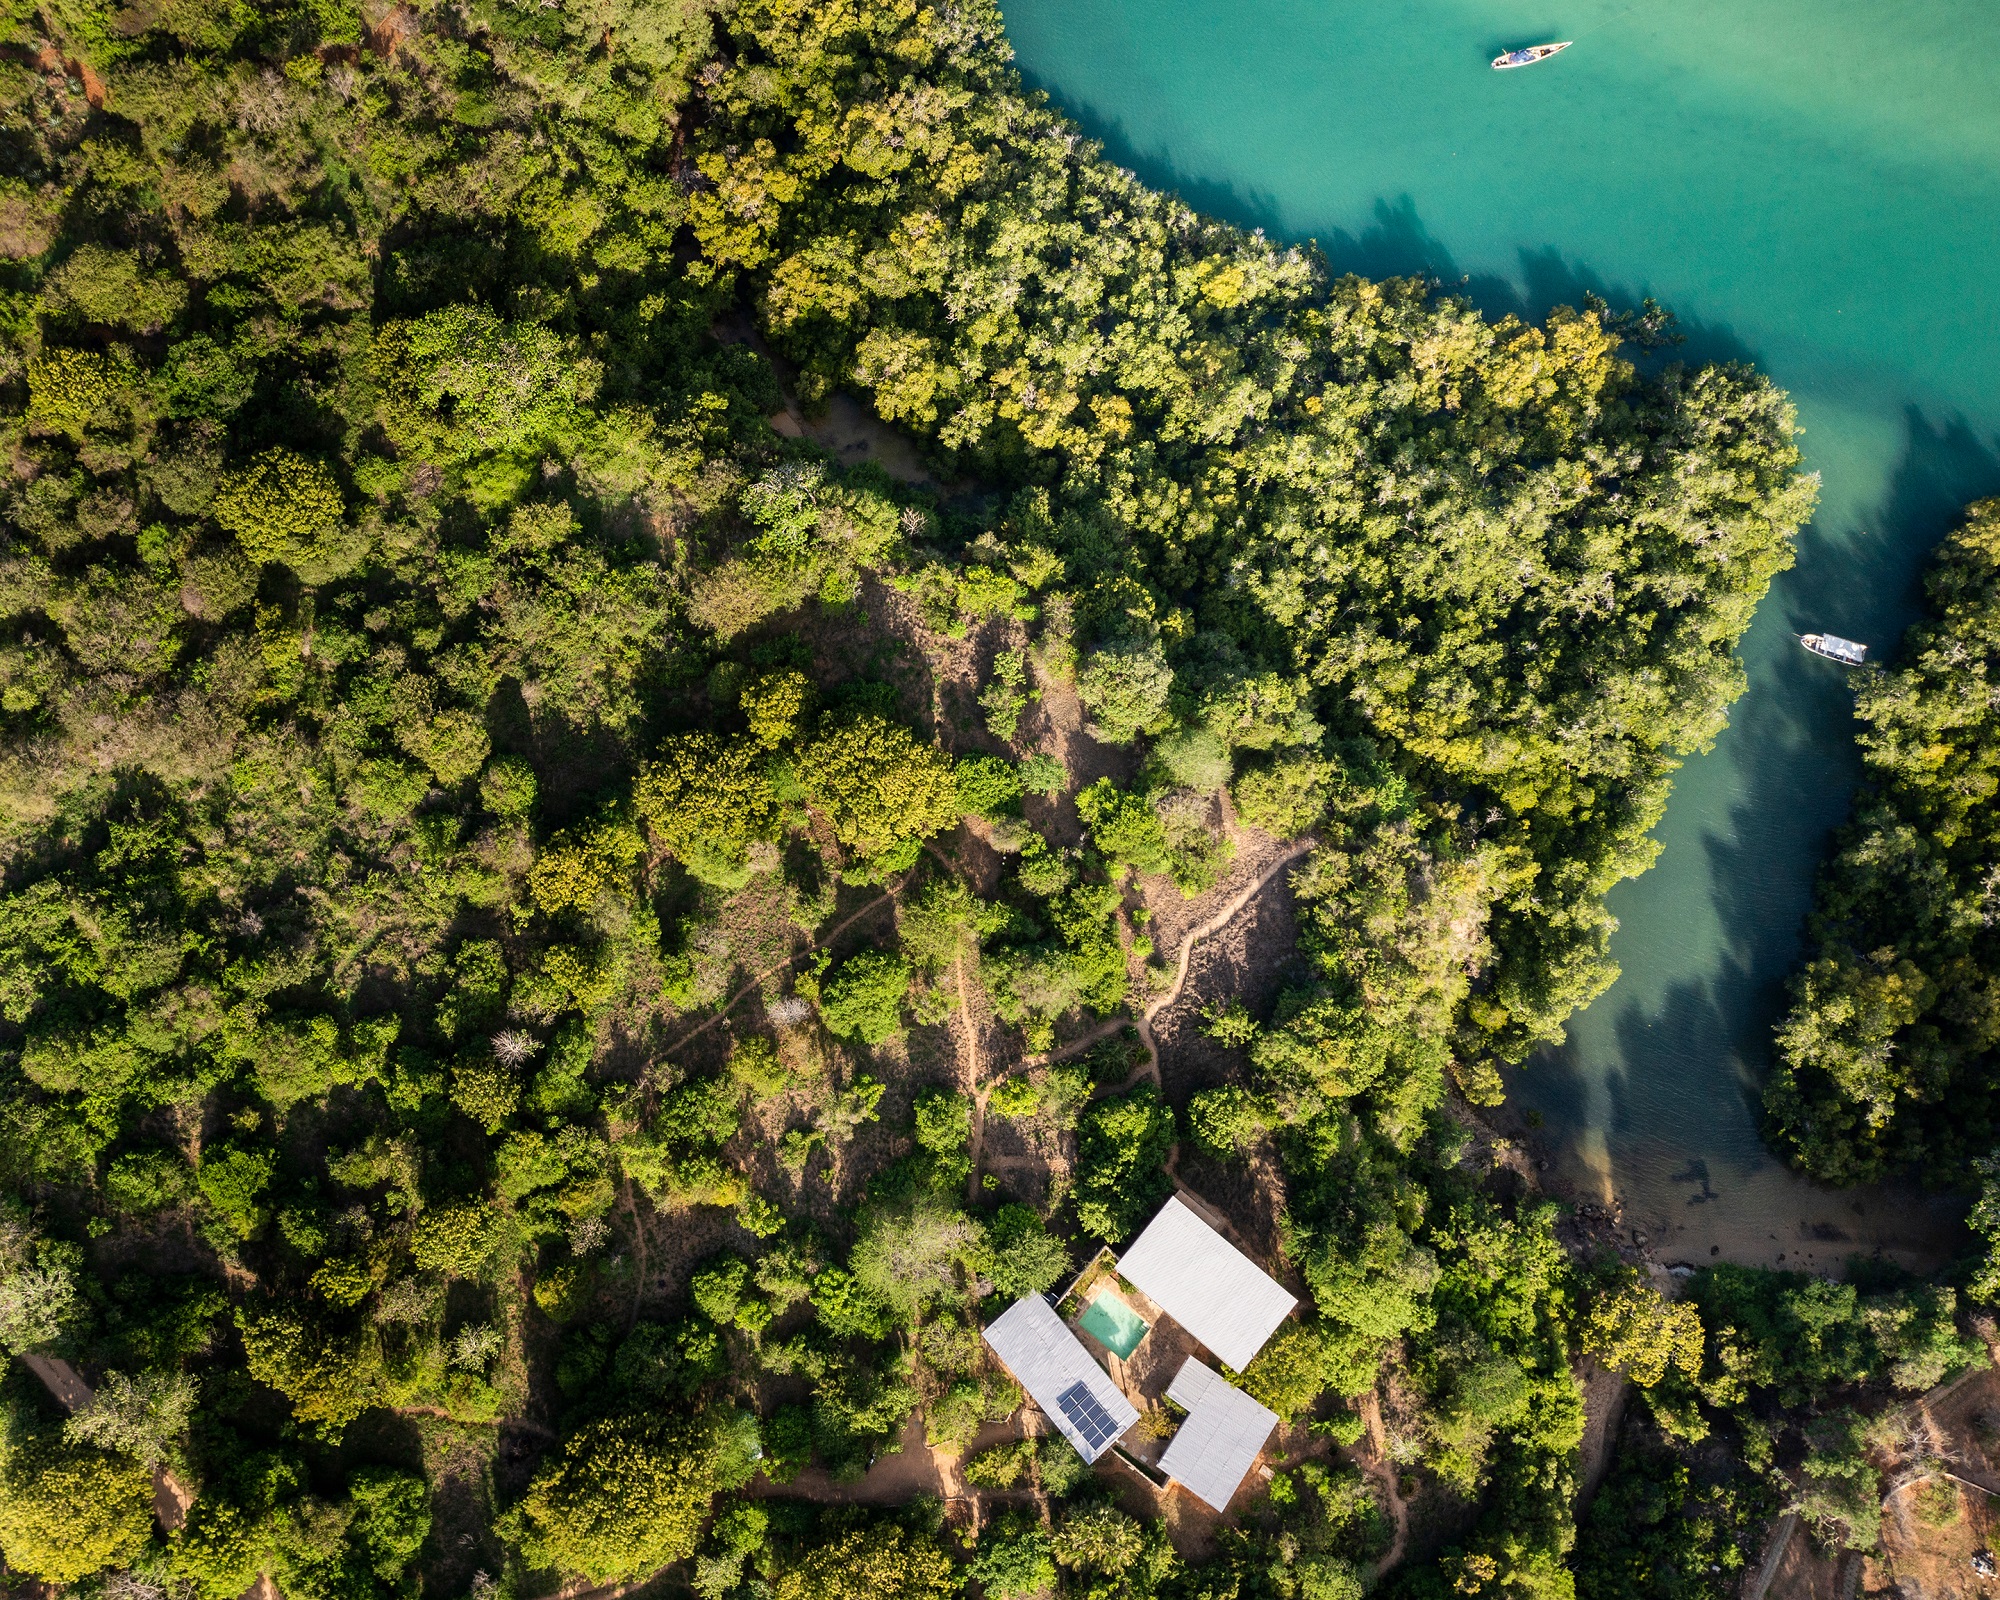 Kipepeo Homestead is located above a coral cliff and mangrove trees facing Takaungu Creek